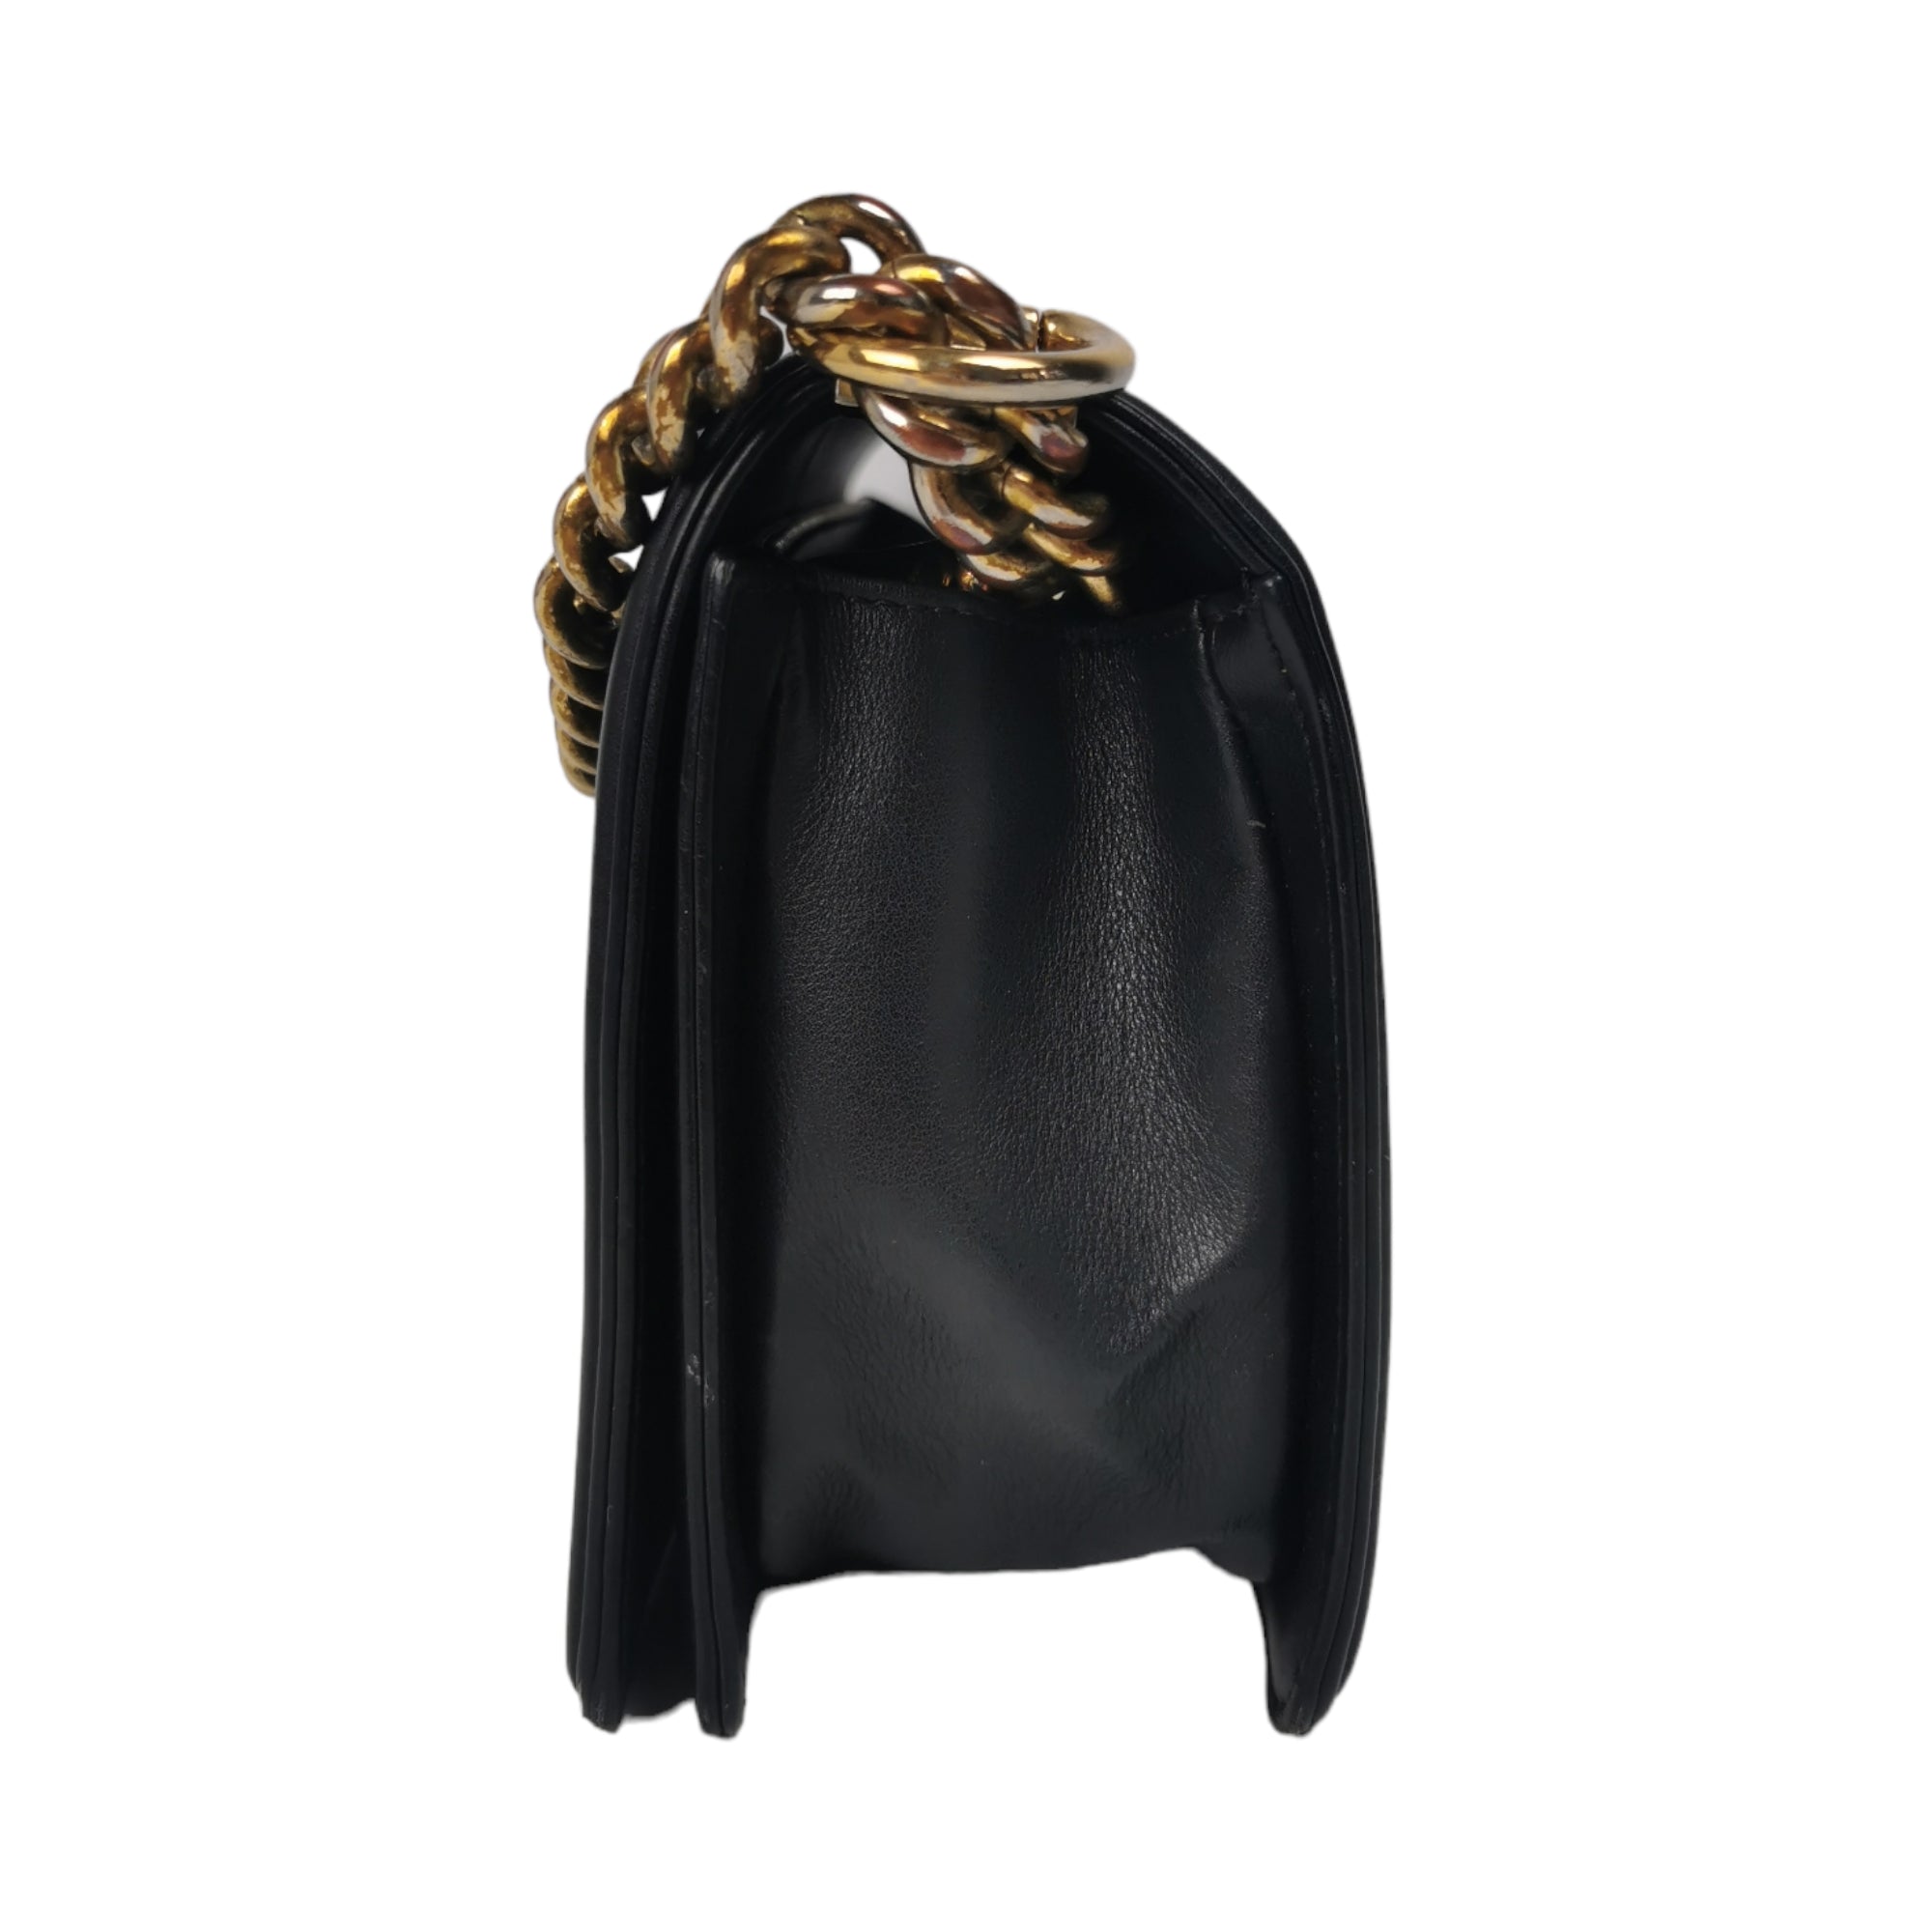 Chanel boy bag, black, Chanel Flap Bag, Lamb skin, Old Medium